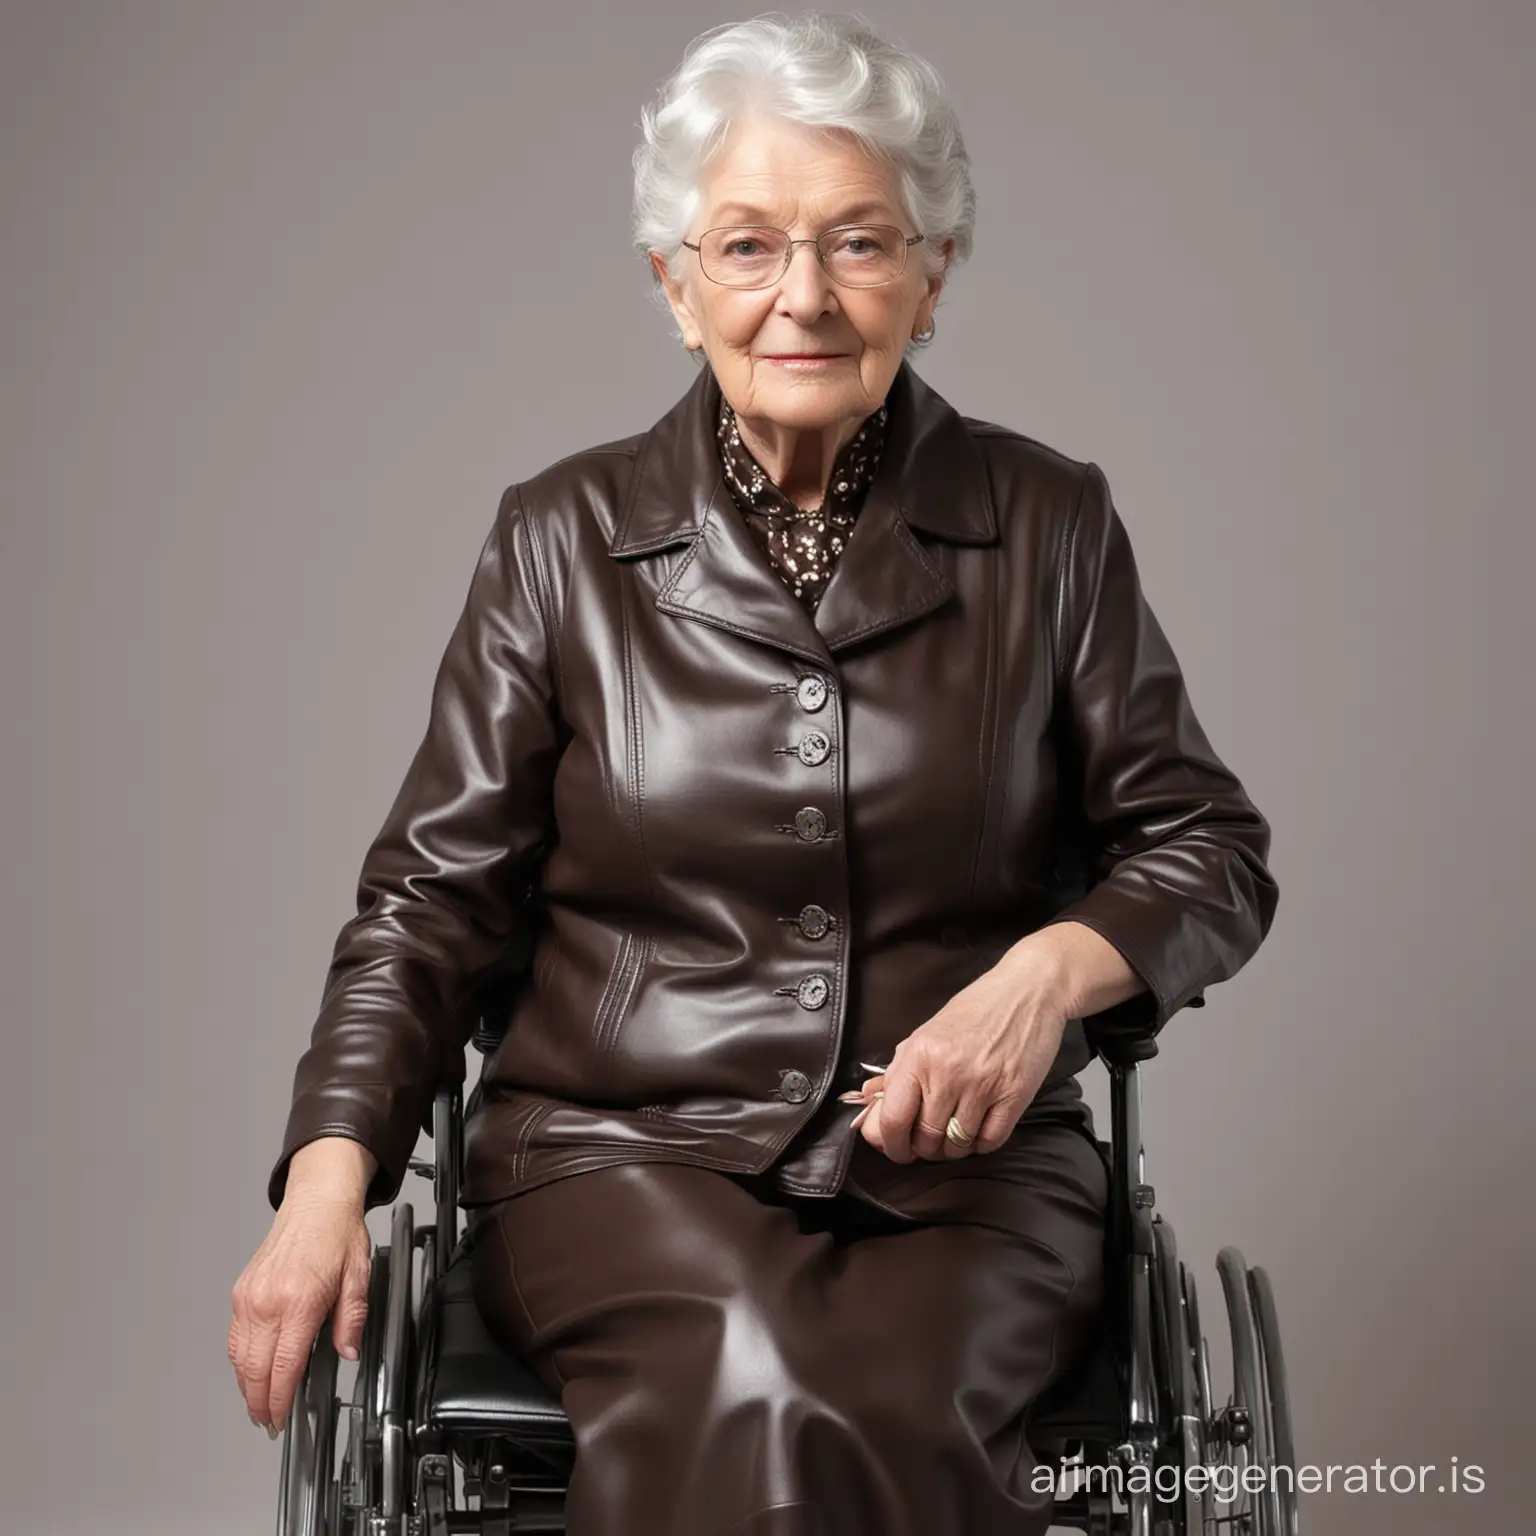 Elderly-Woman-Crafting-Leather-Art-Empowering-Creativity-despite-Disability